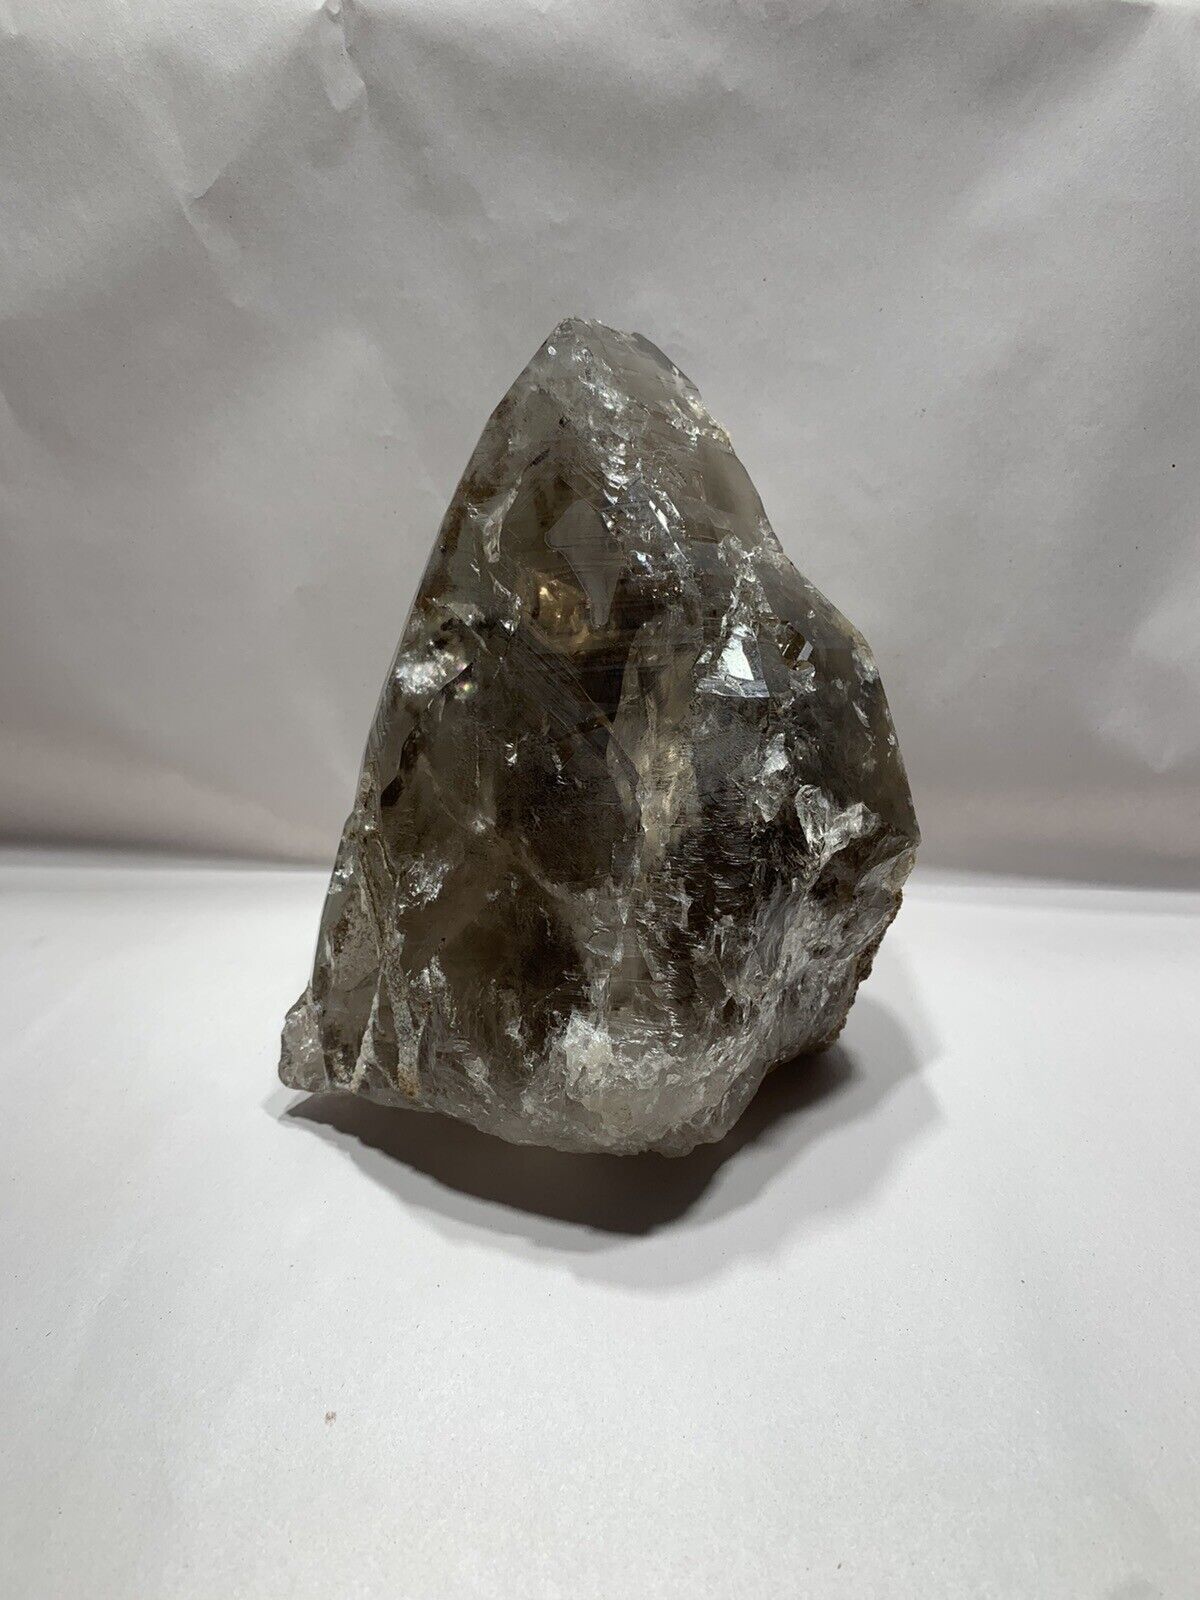 Rehealed Smoky Quartz Crystal With Degraded Rutile Etchings - North Carolina